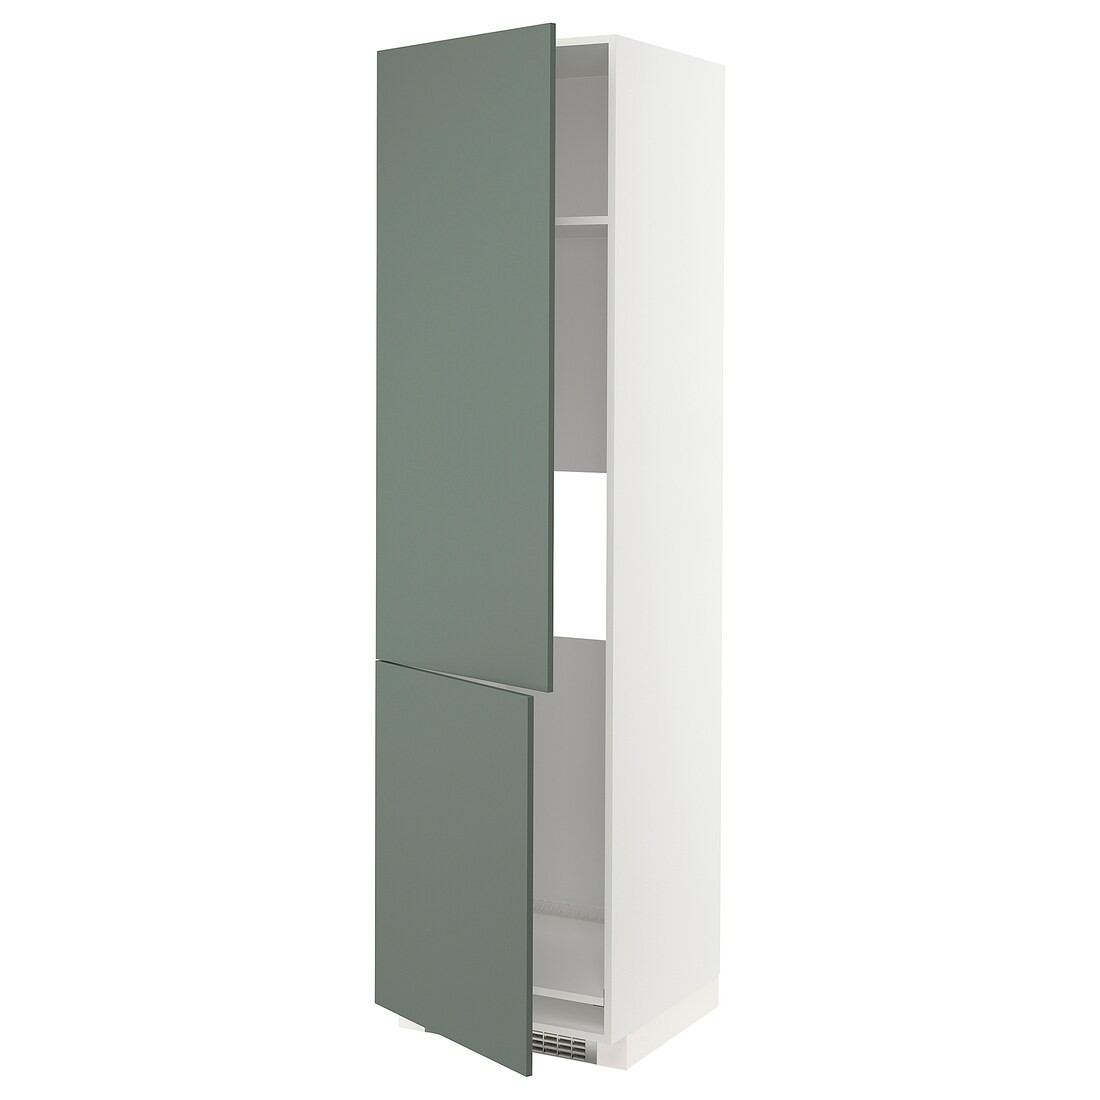 METOD МЕТОД Высокий шкаф для холодильника / морозильника / 2дверцы, белый / Bodarp серо-зеленый, 60x60x220 см